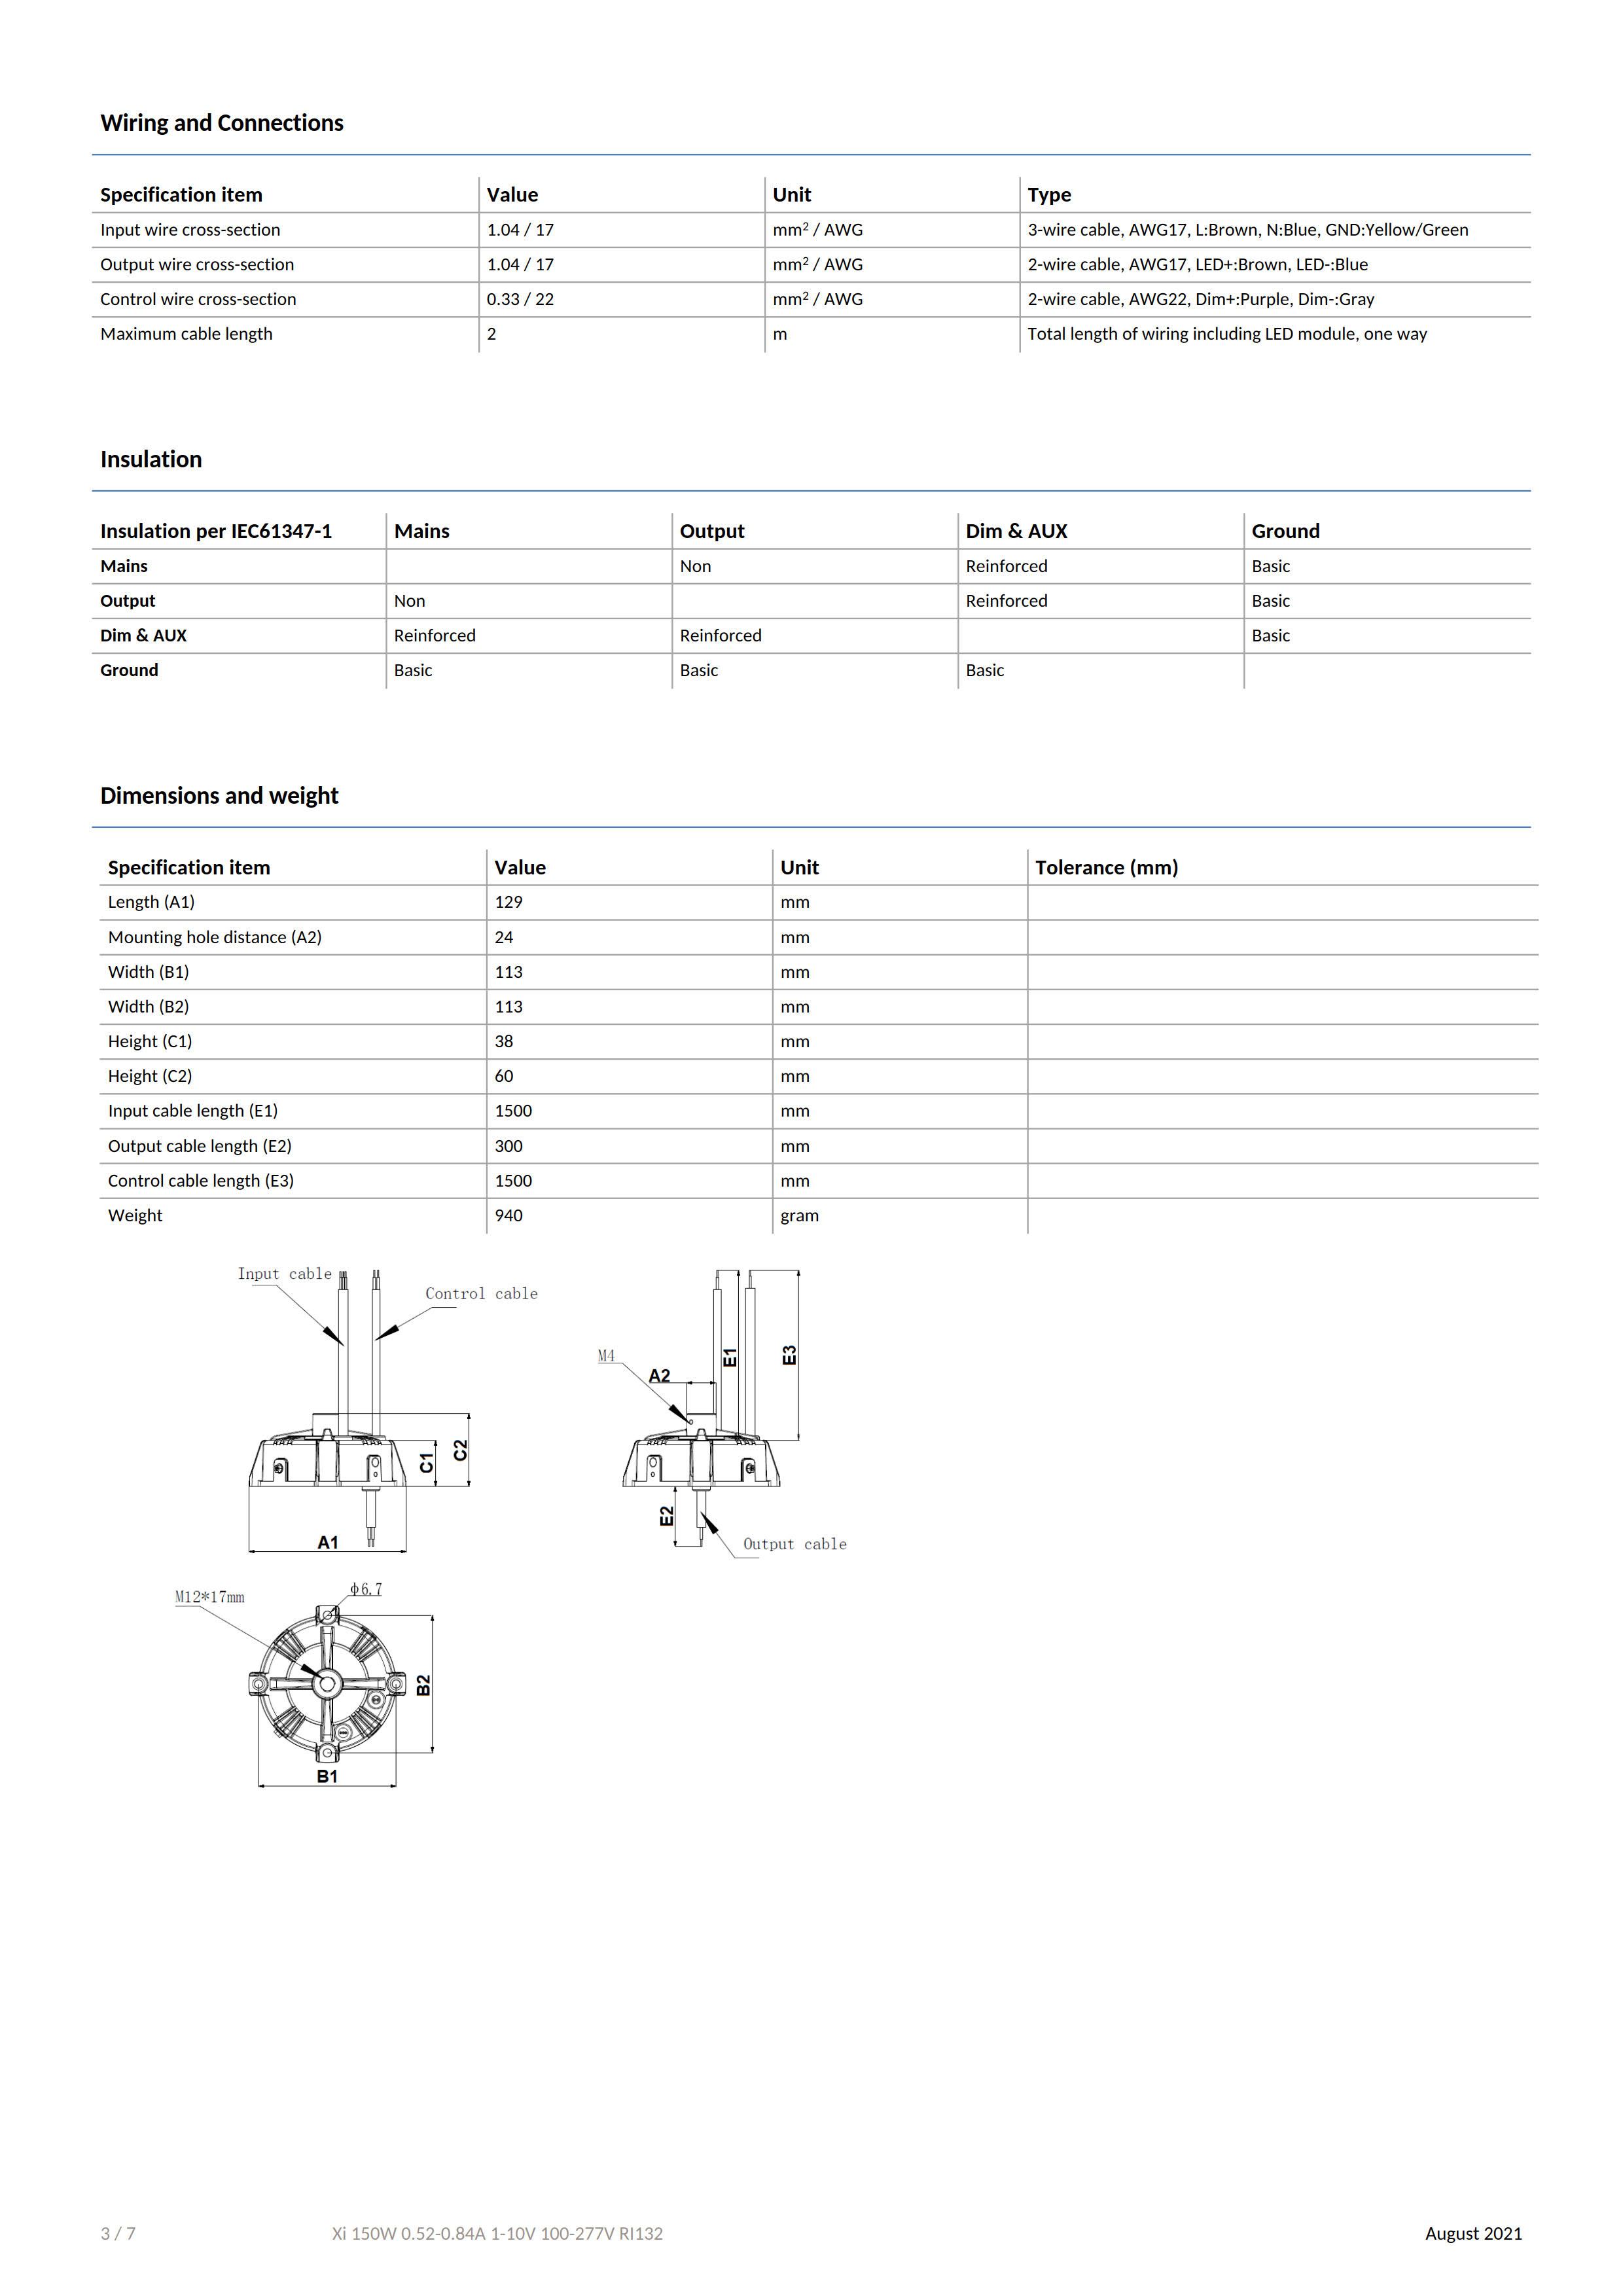 PHILIPS Xitanium High Bay LED Drivers Xi 150W 0.52-0.84A 1-10V 100-277V RI132 929002815180